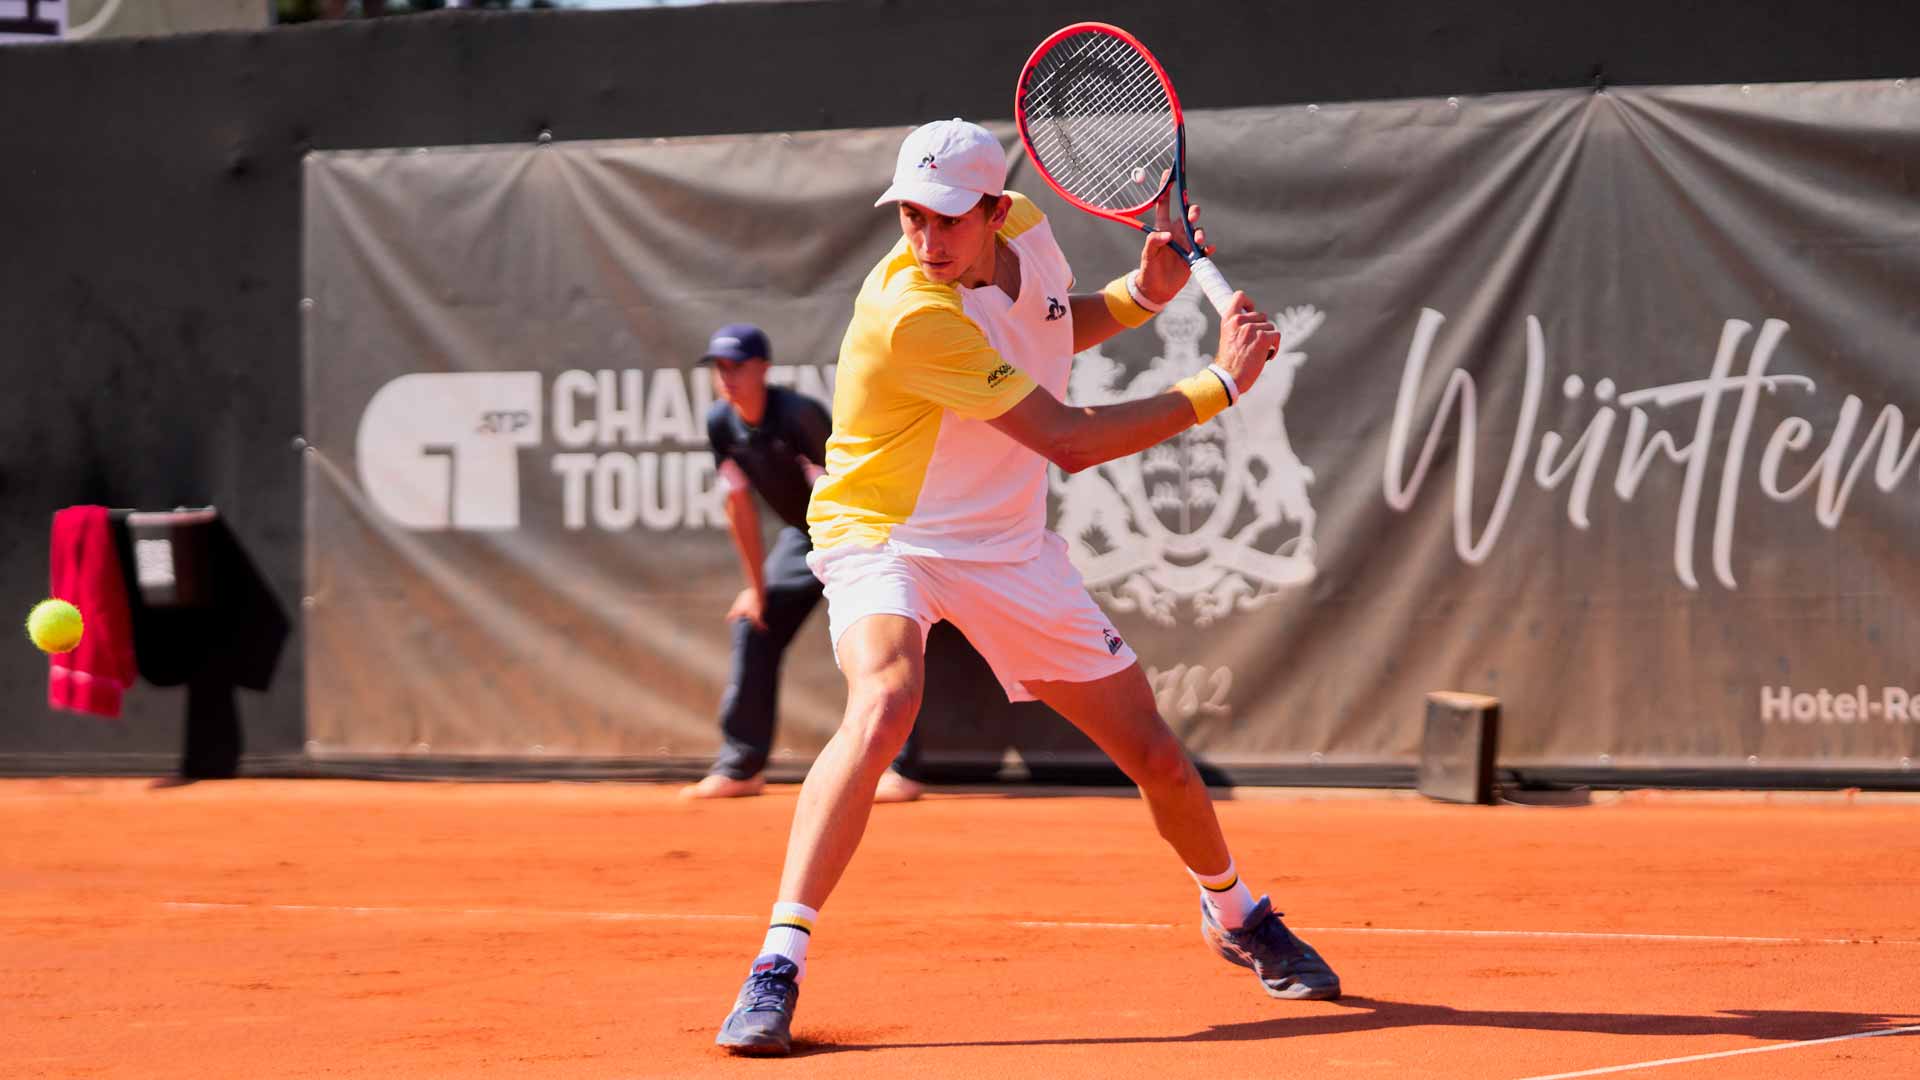 Matteo Arnaldi Claims Fourth Challenger Title To Reach Career High ATP Tour Tennis